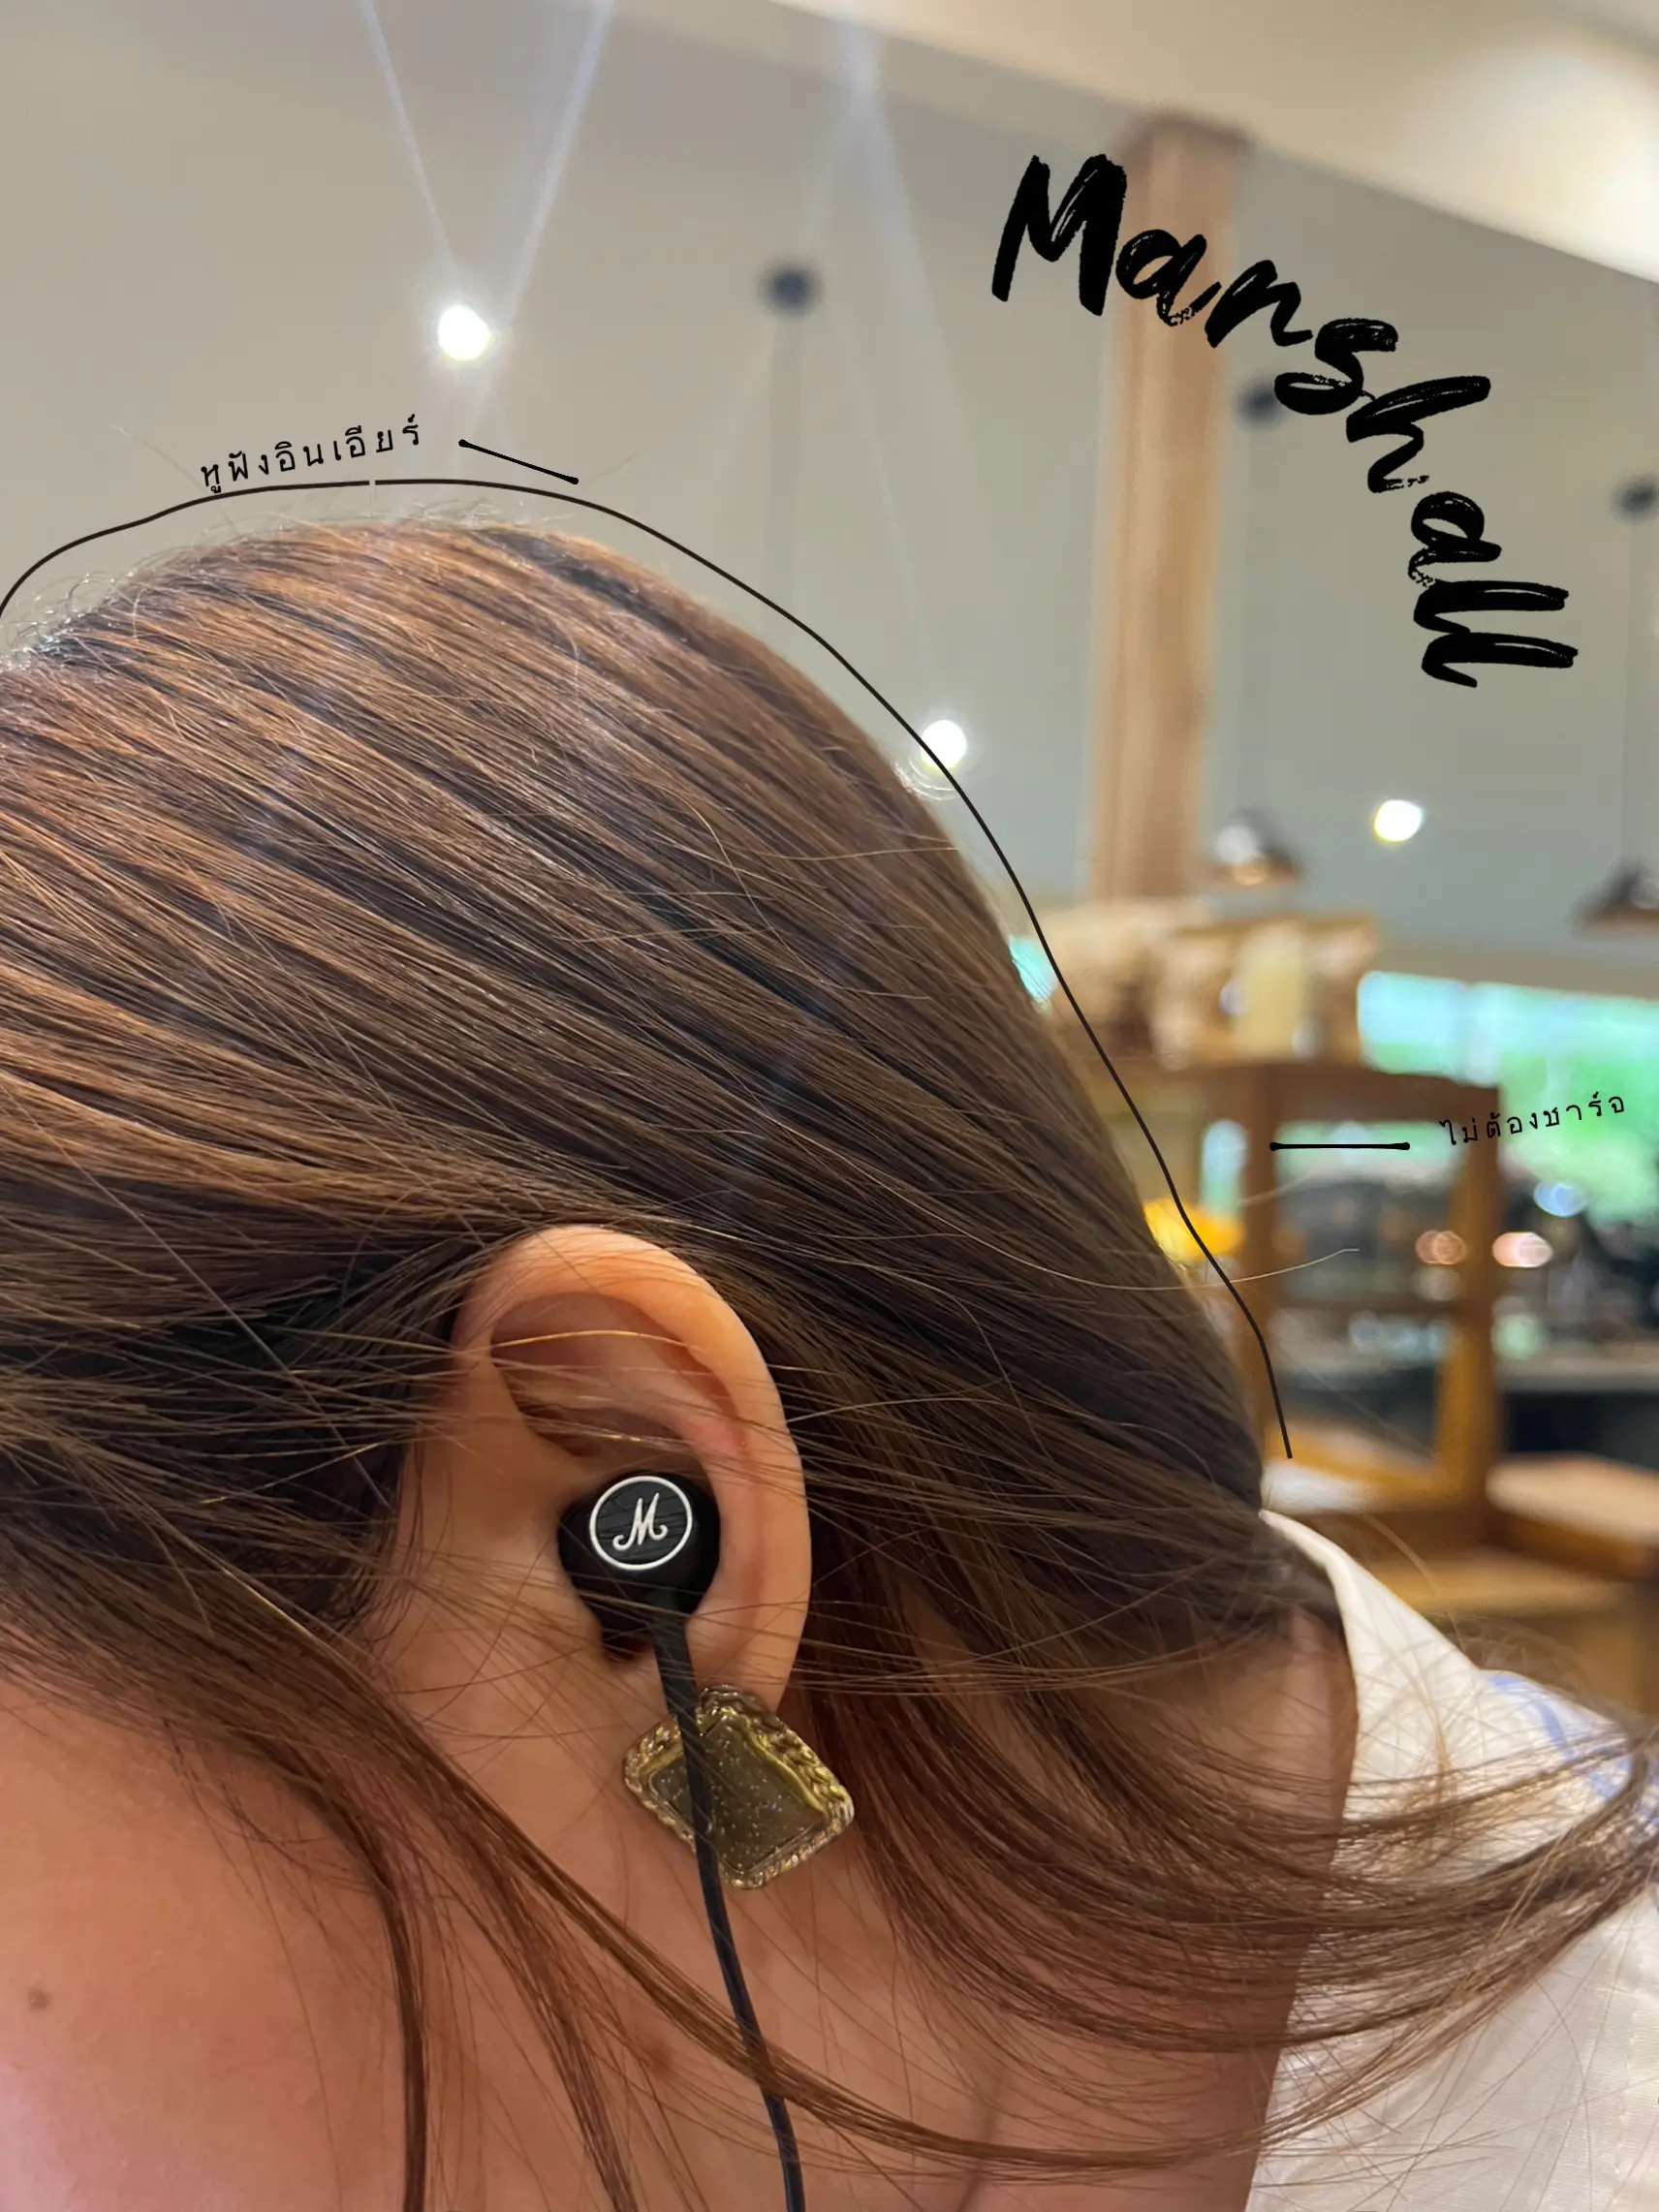 Marshall Major III On the Ear Wireless Headphones Brown NEW Japan